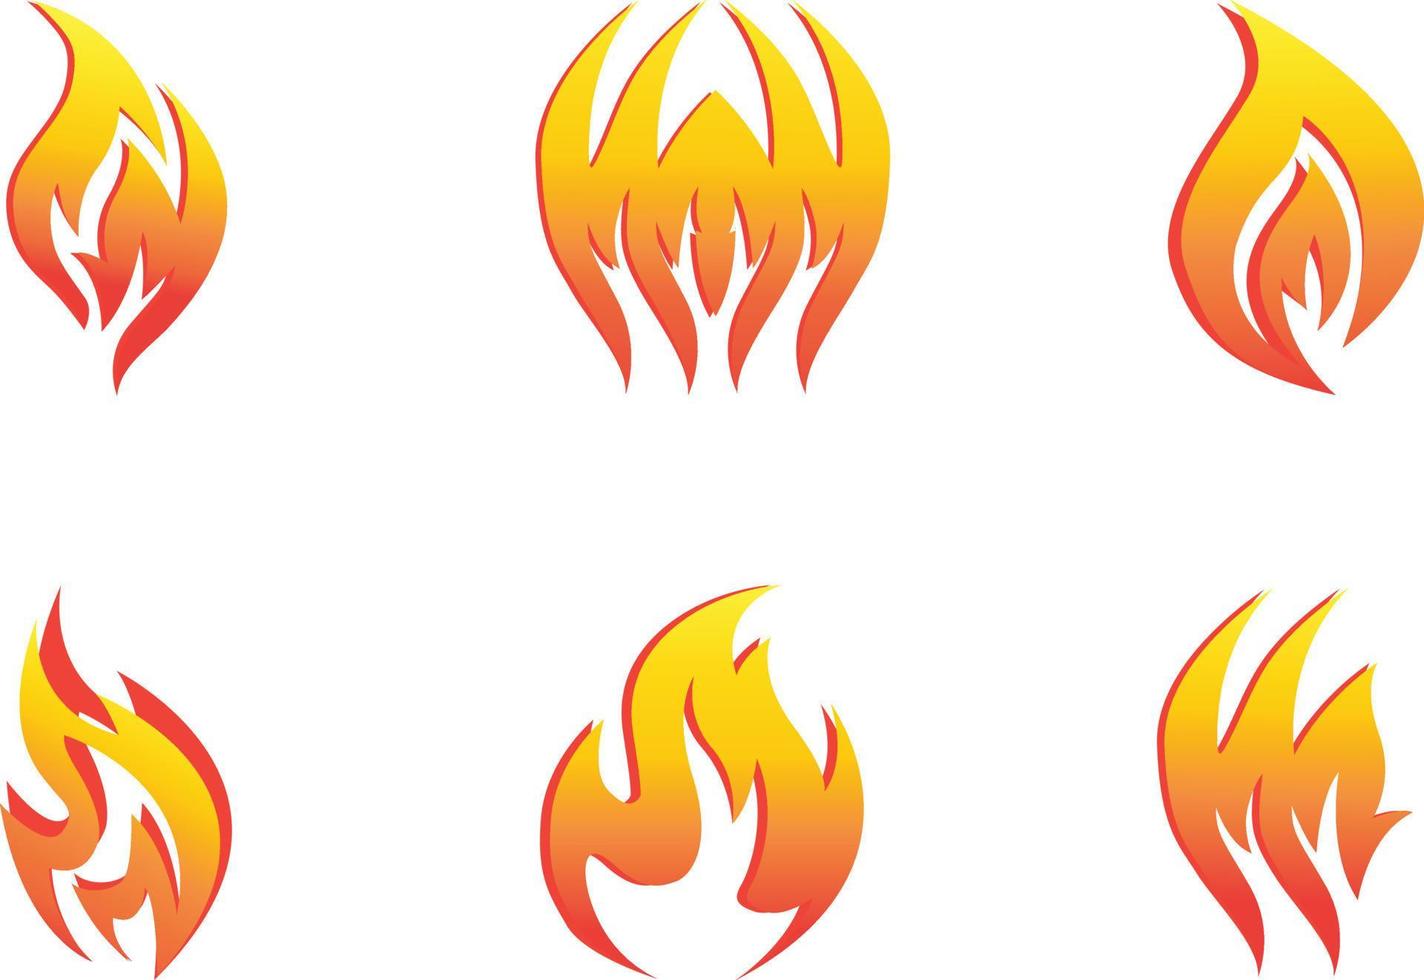 flammes de feu, définir des icônes, art vectoriel d'illustration